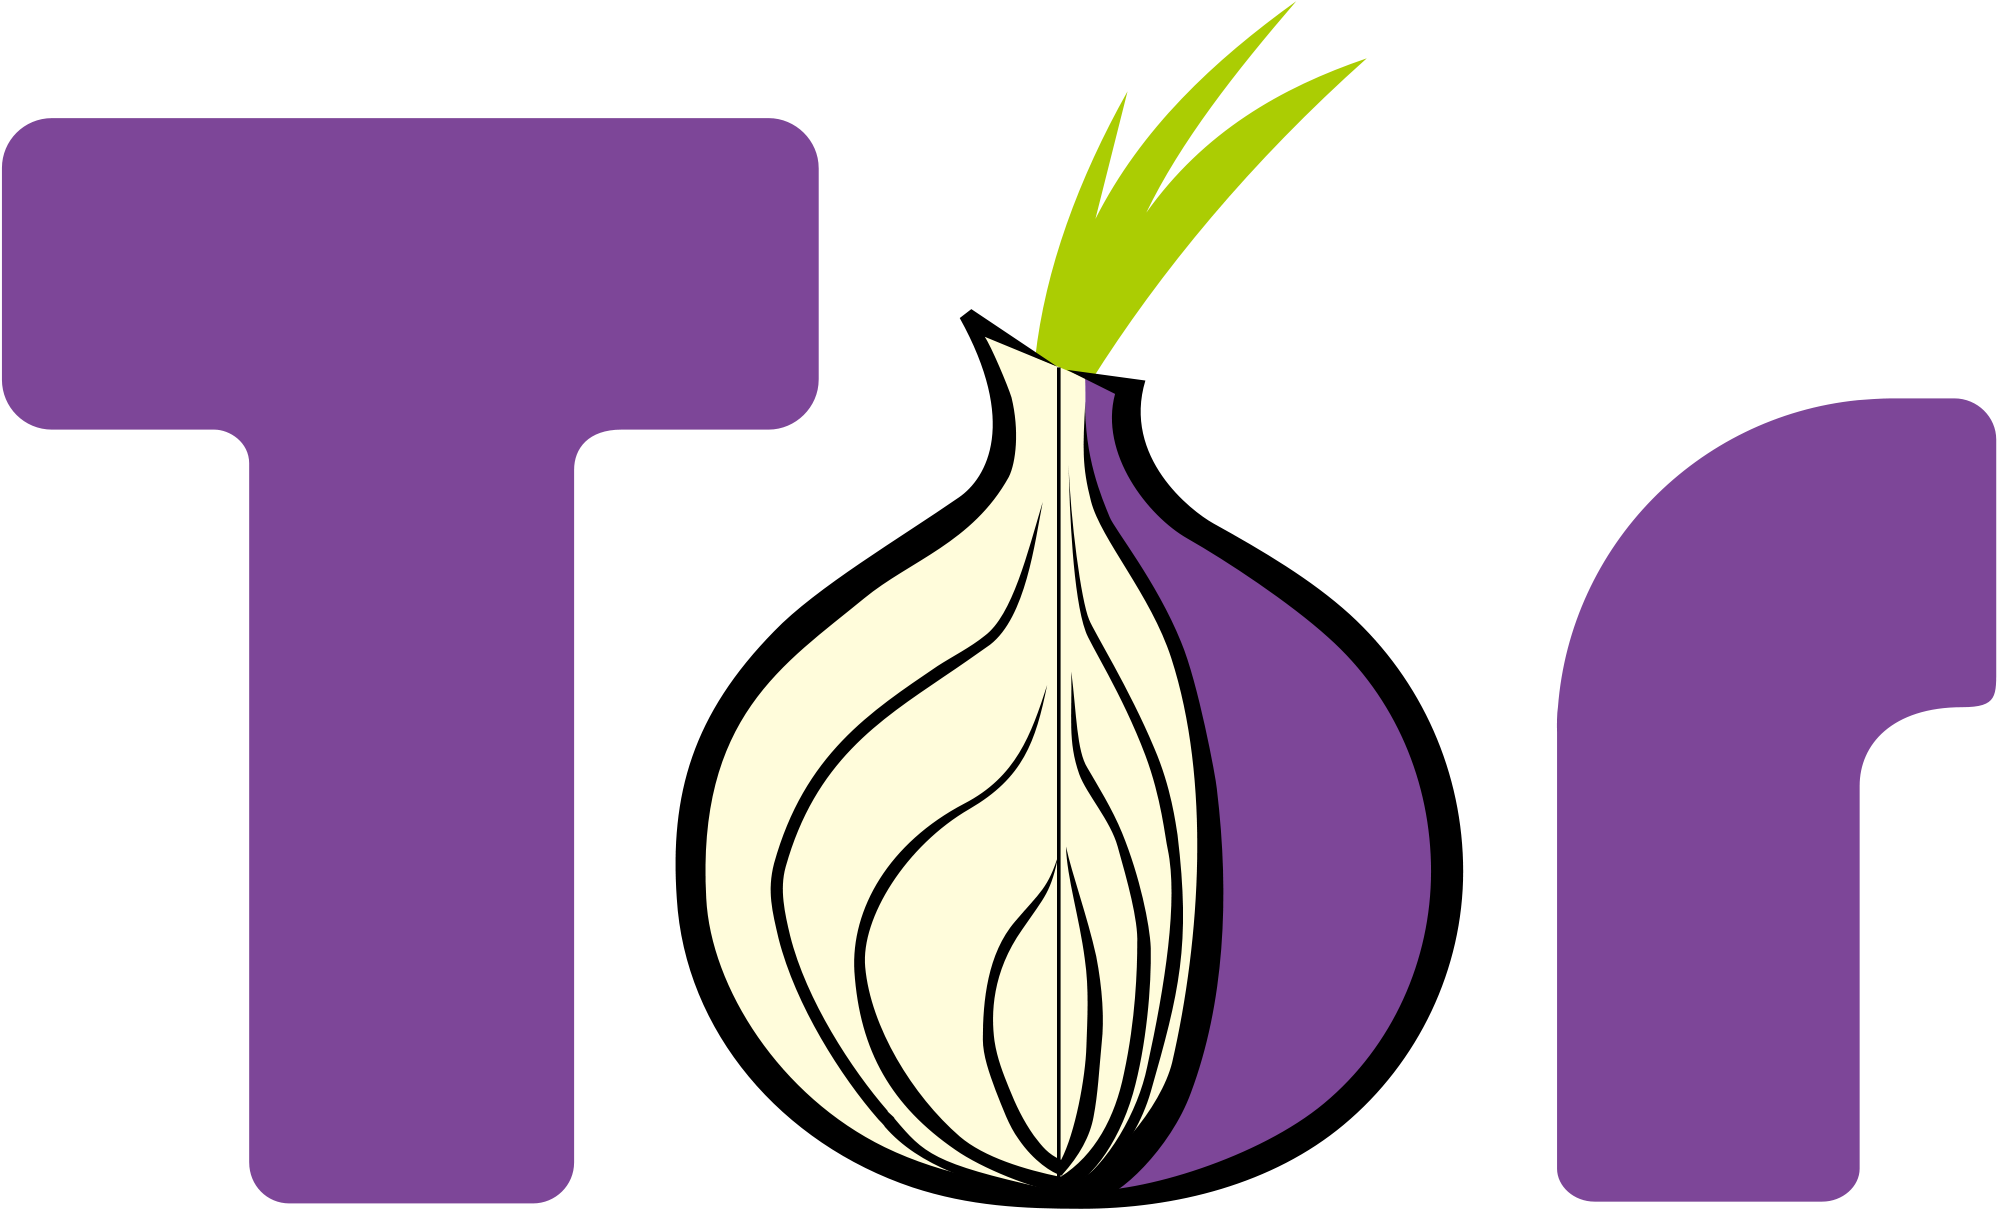 Tor logo 2011 flat.svg